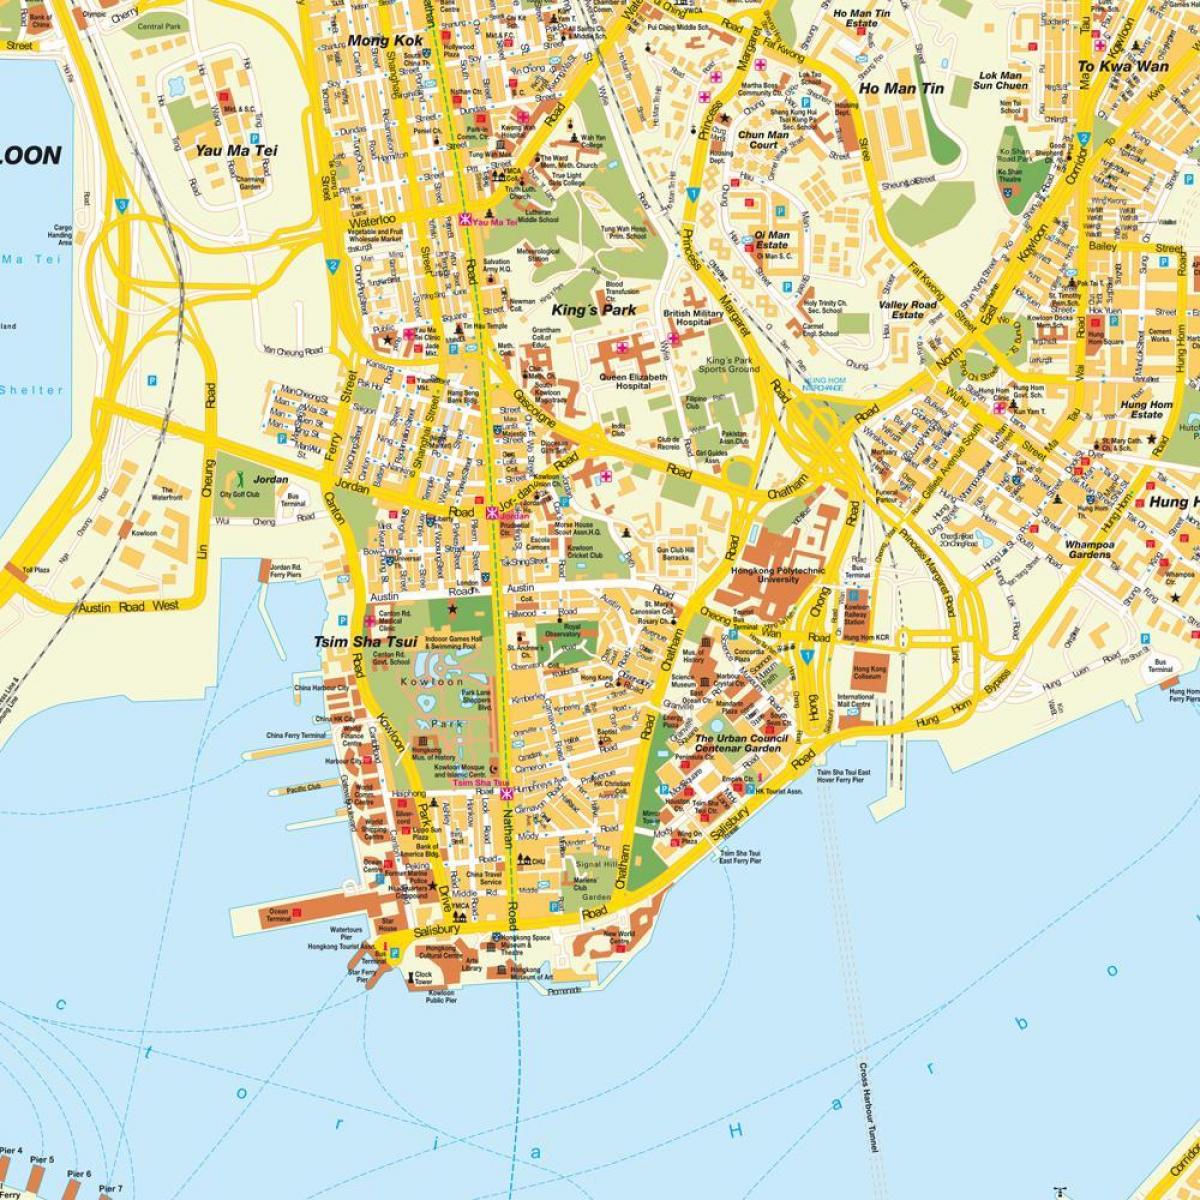 Hong Kong grad mapu